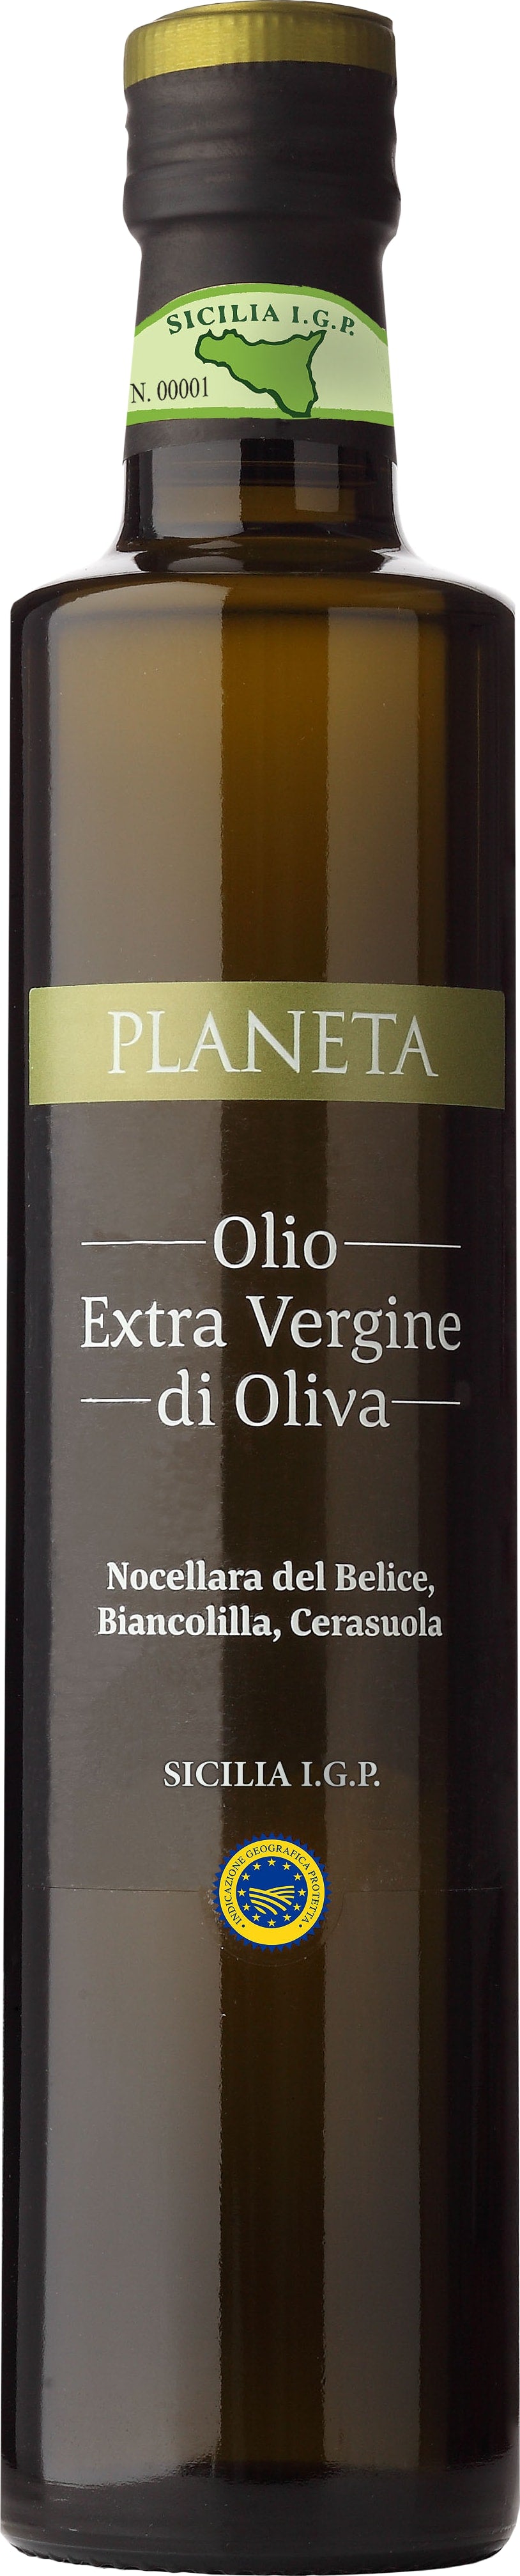 Olio EV di Oliva 23 Planeta 25cl - Buy Planeta Wines from GREAT WINES DIRECT wine shop